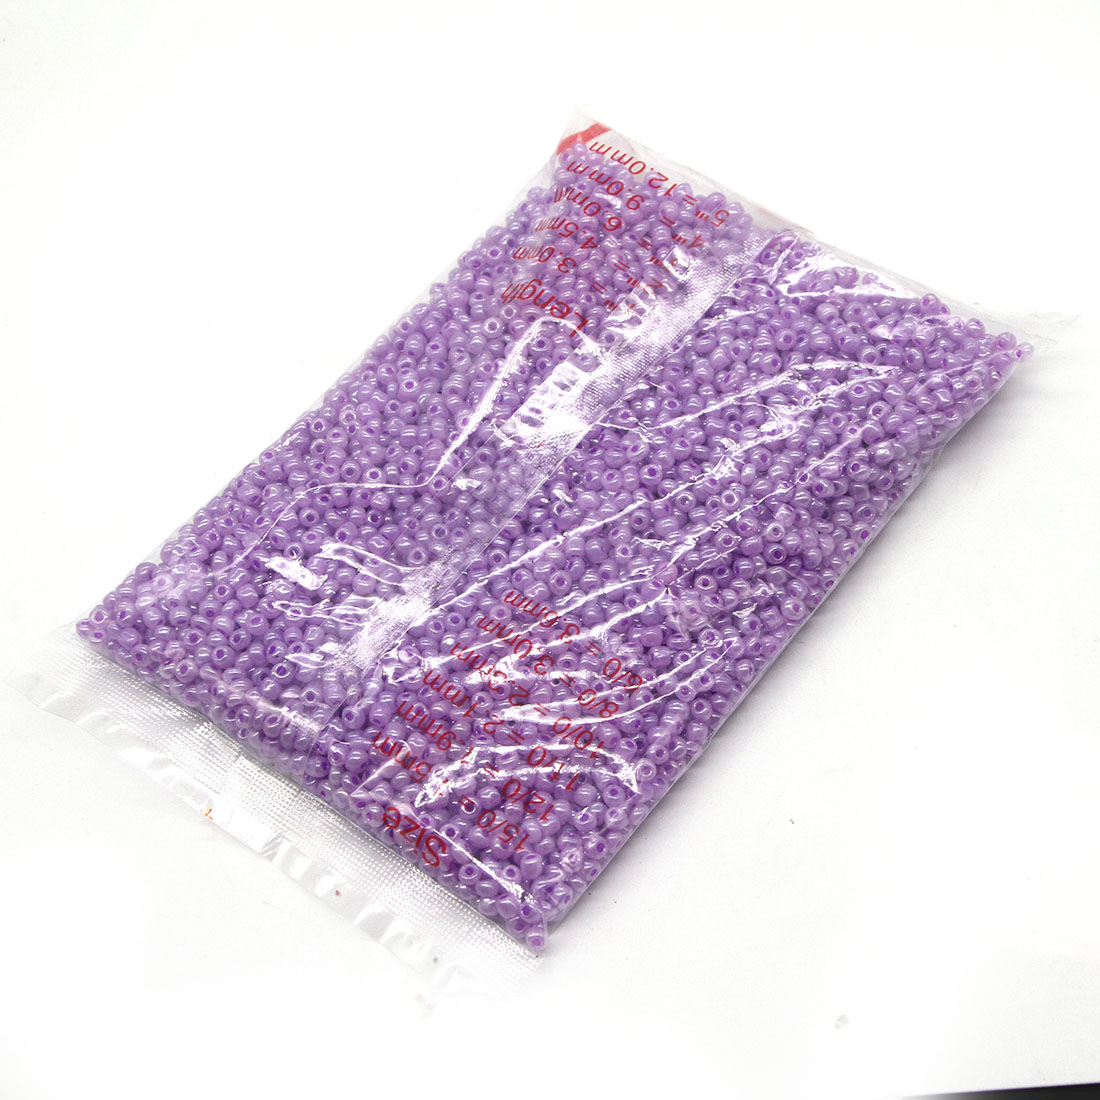 Purple 4mm 4500 packs